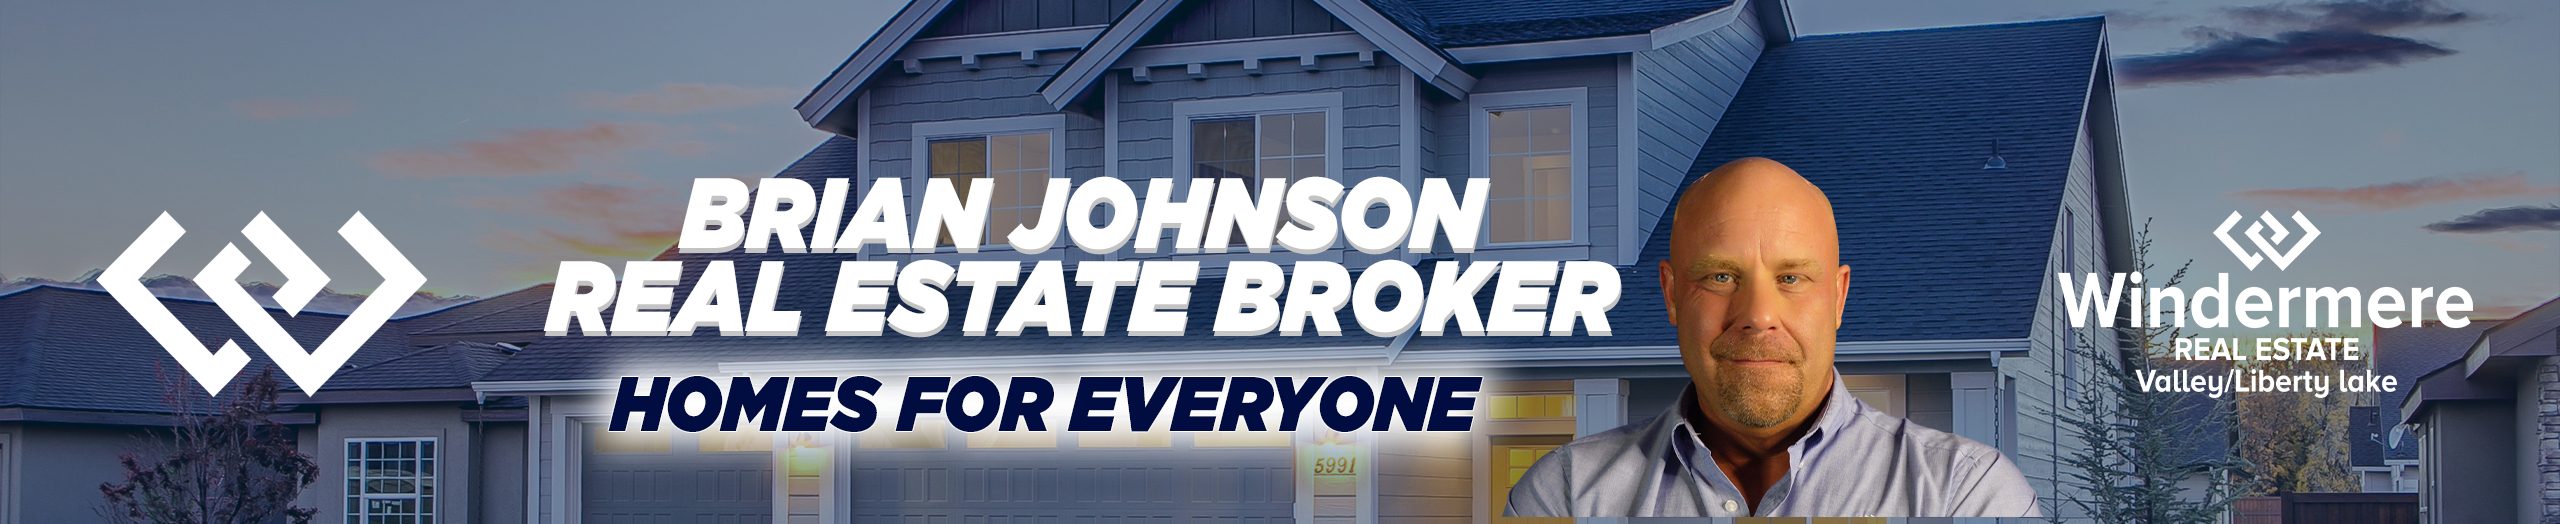 spokane washington, brian johnson real estate agent windermere, realtor